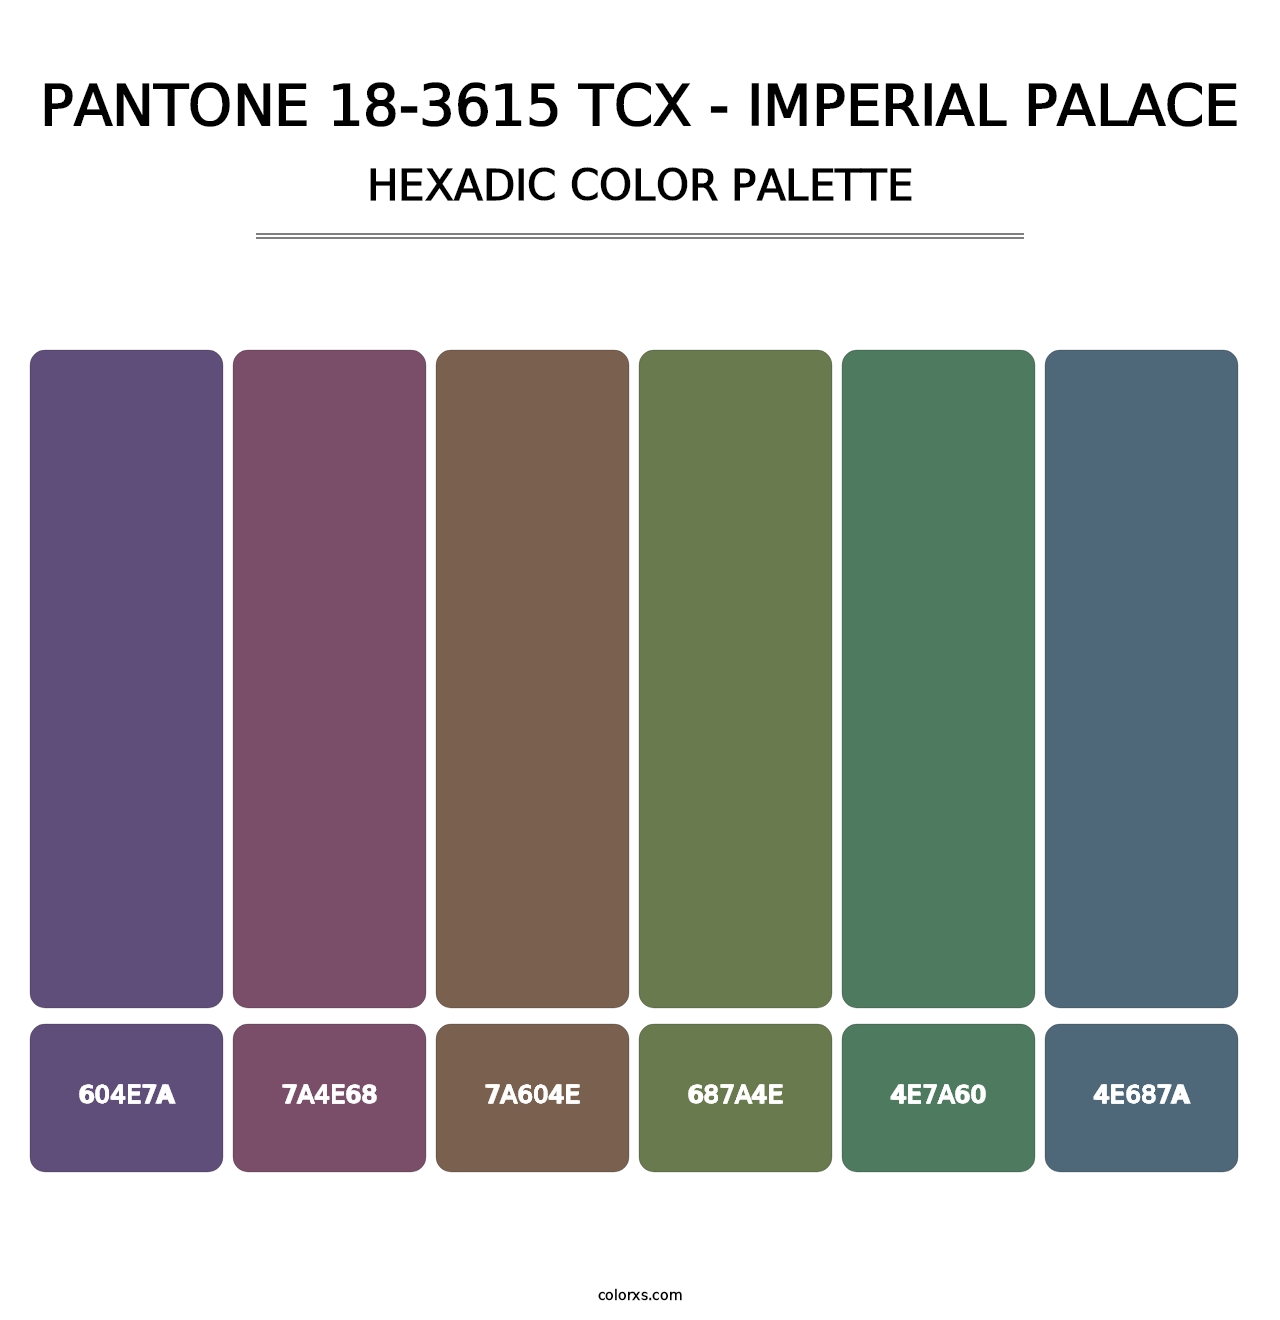 PANTONE 18-3615 TCX - Imperial Palace - Hexadic Color Palette